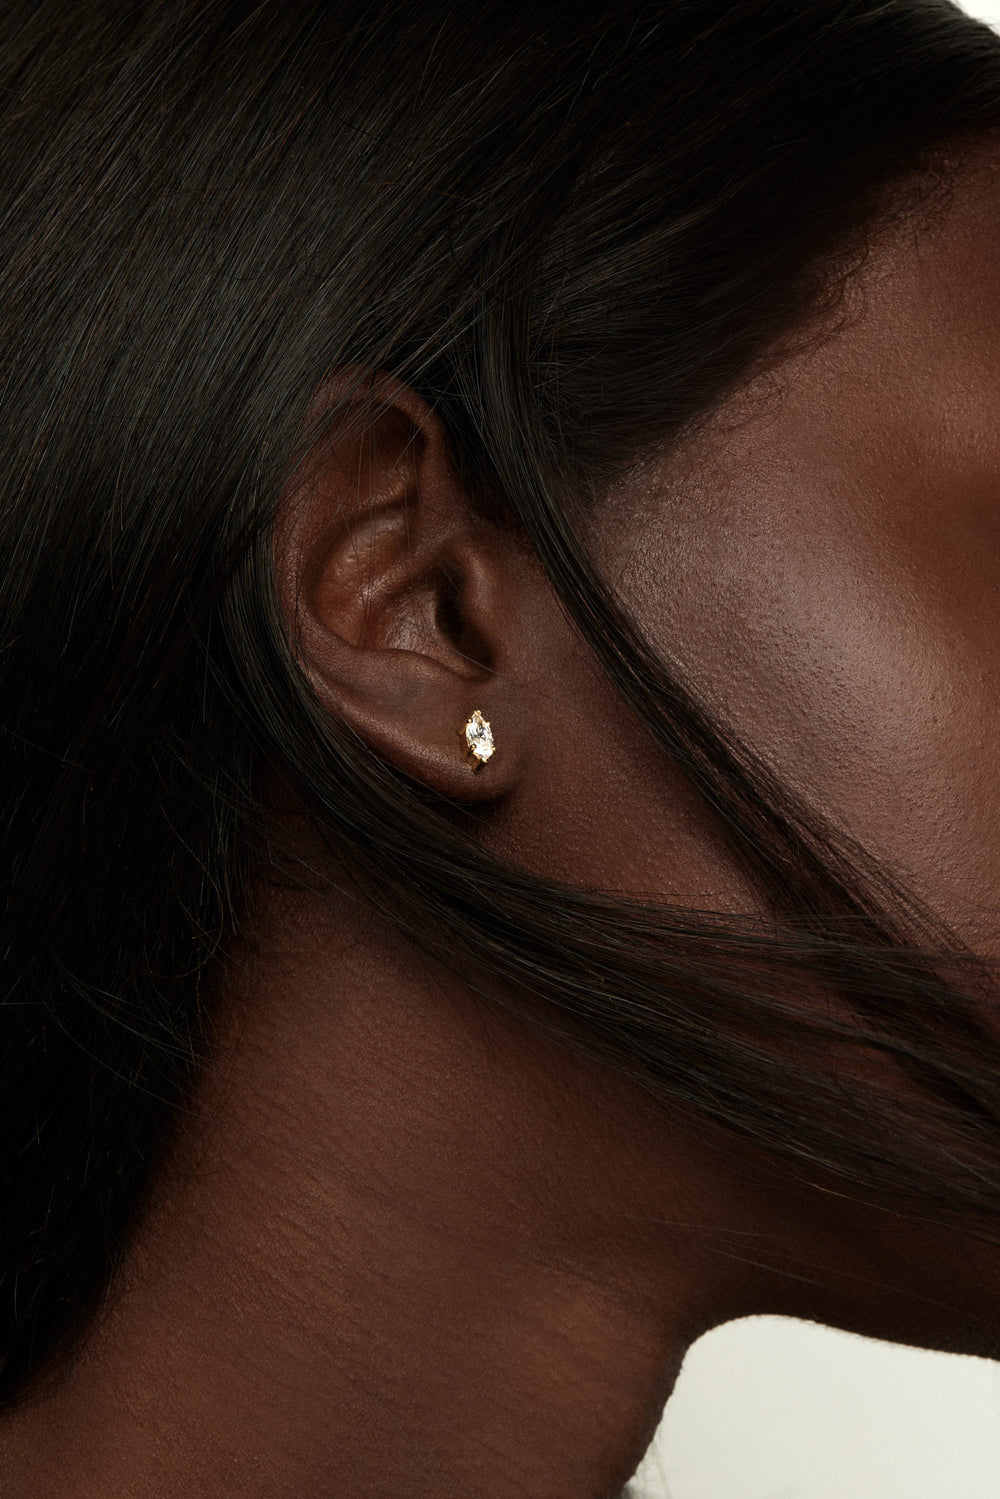 Marquise Diamond Stud Earrings | 18K White Gold